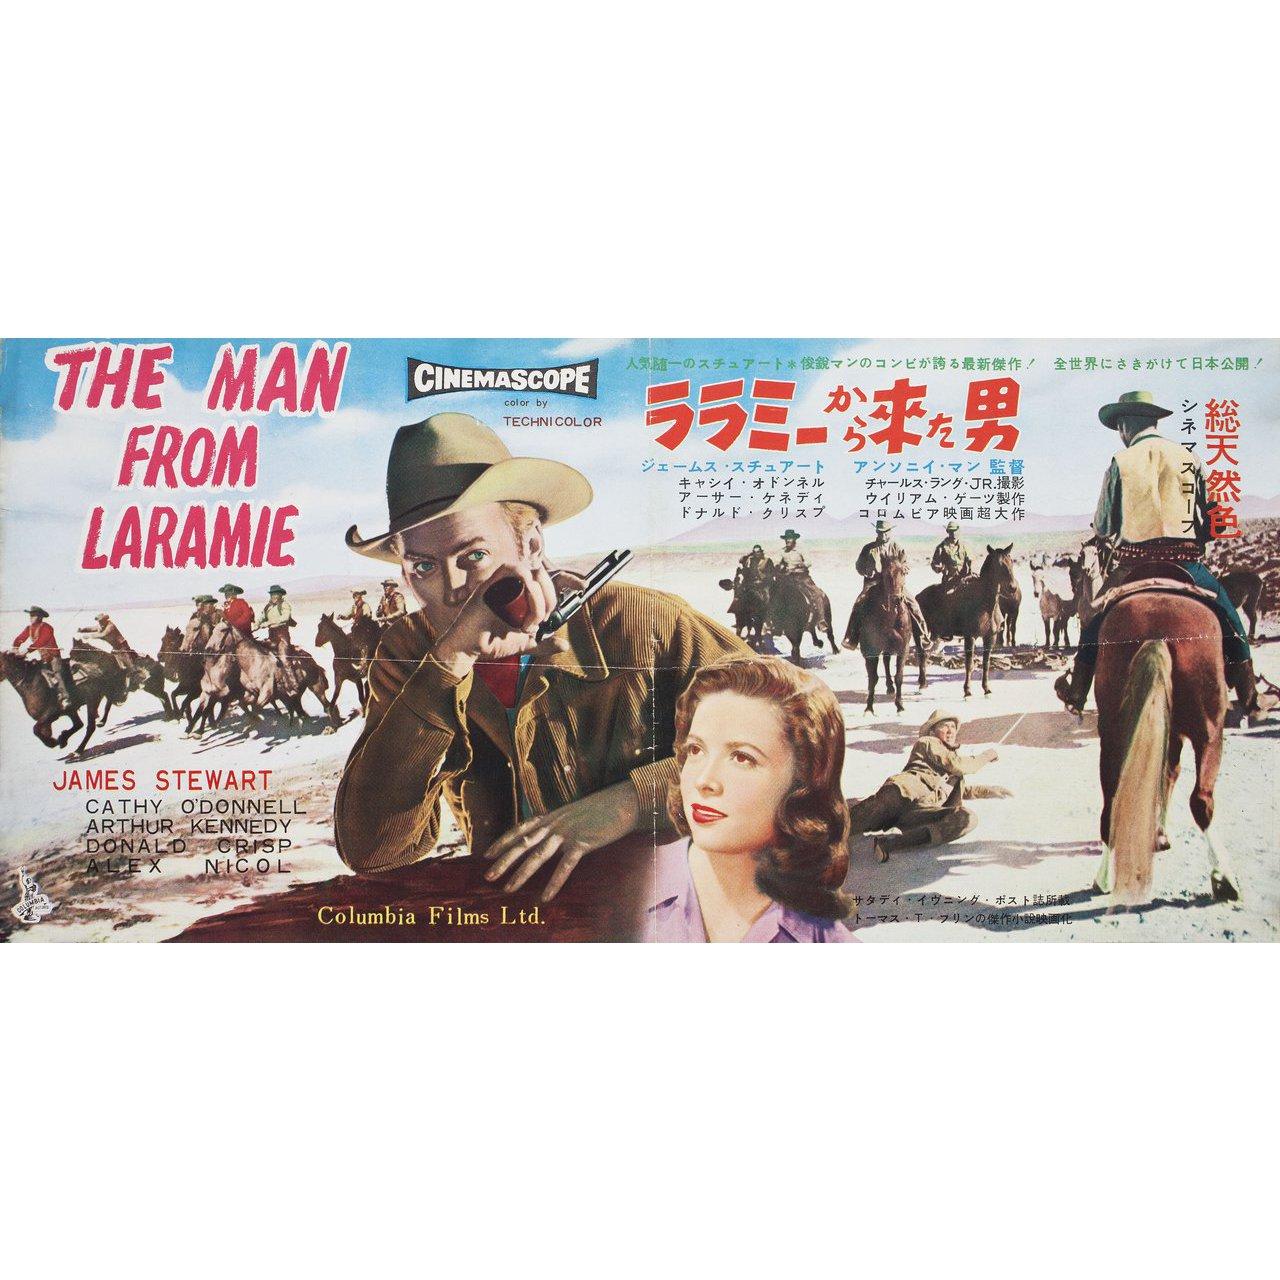 The Man from Laramie 1955 Japanese Press Film Poster